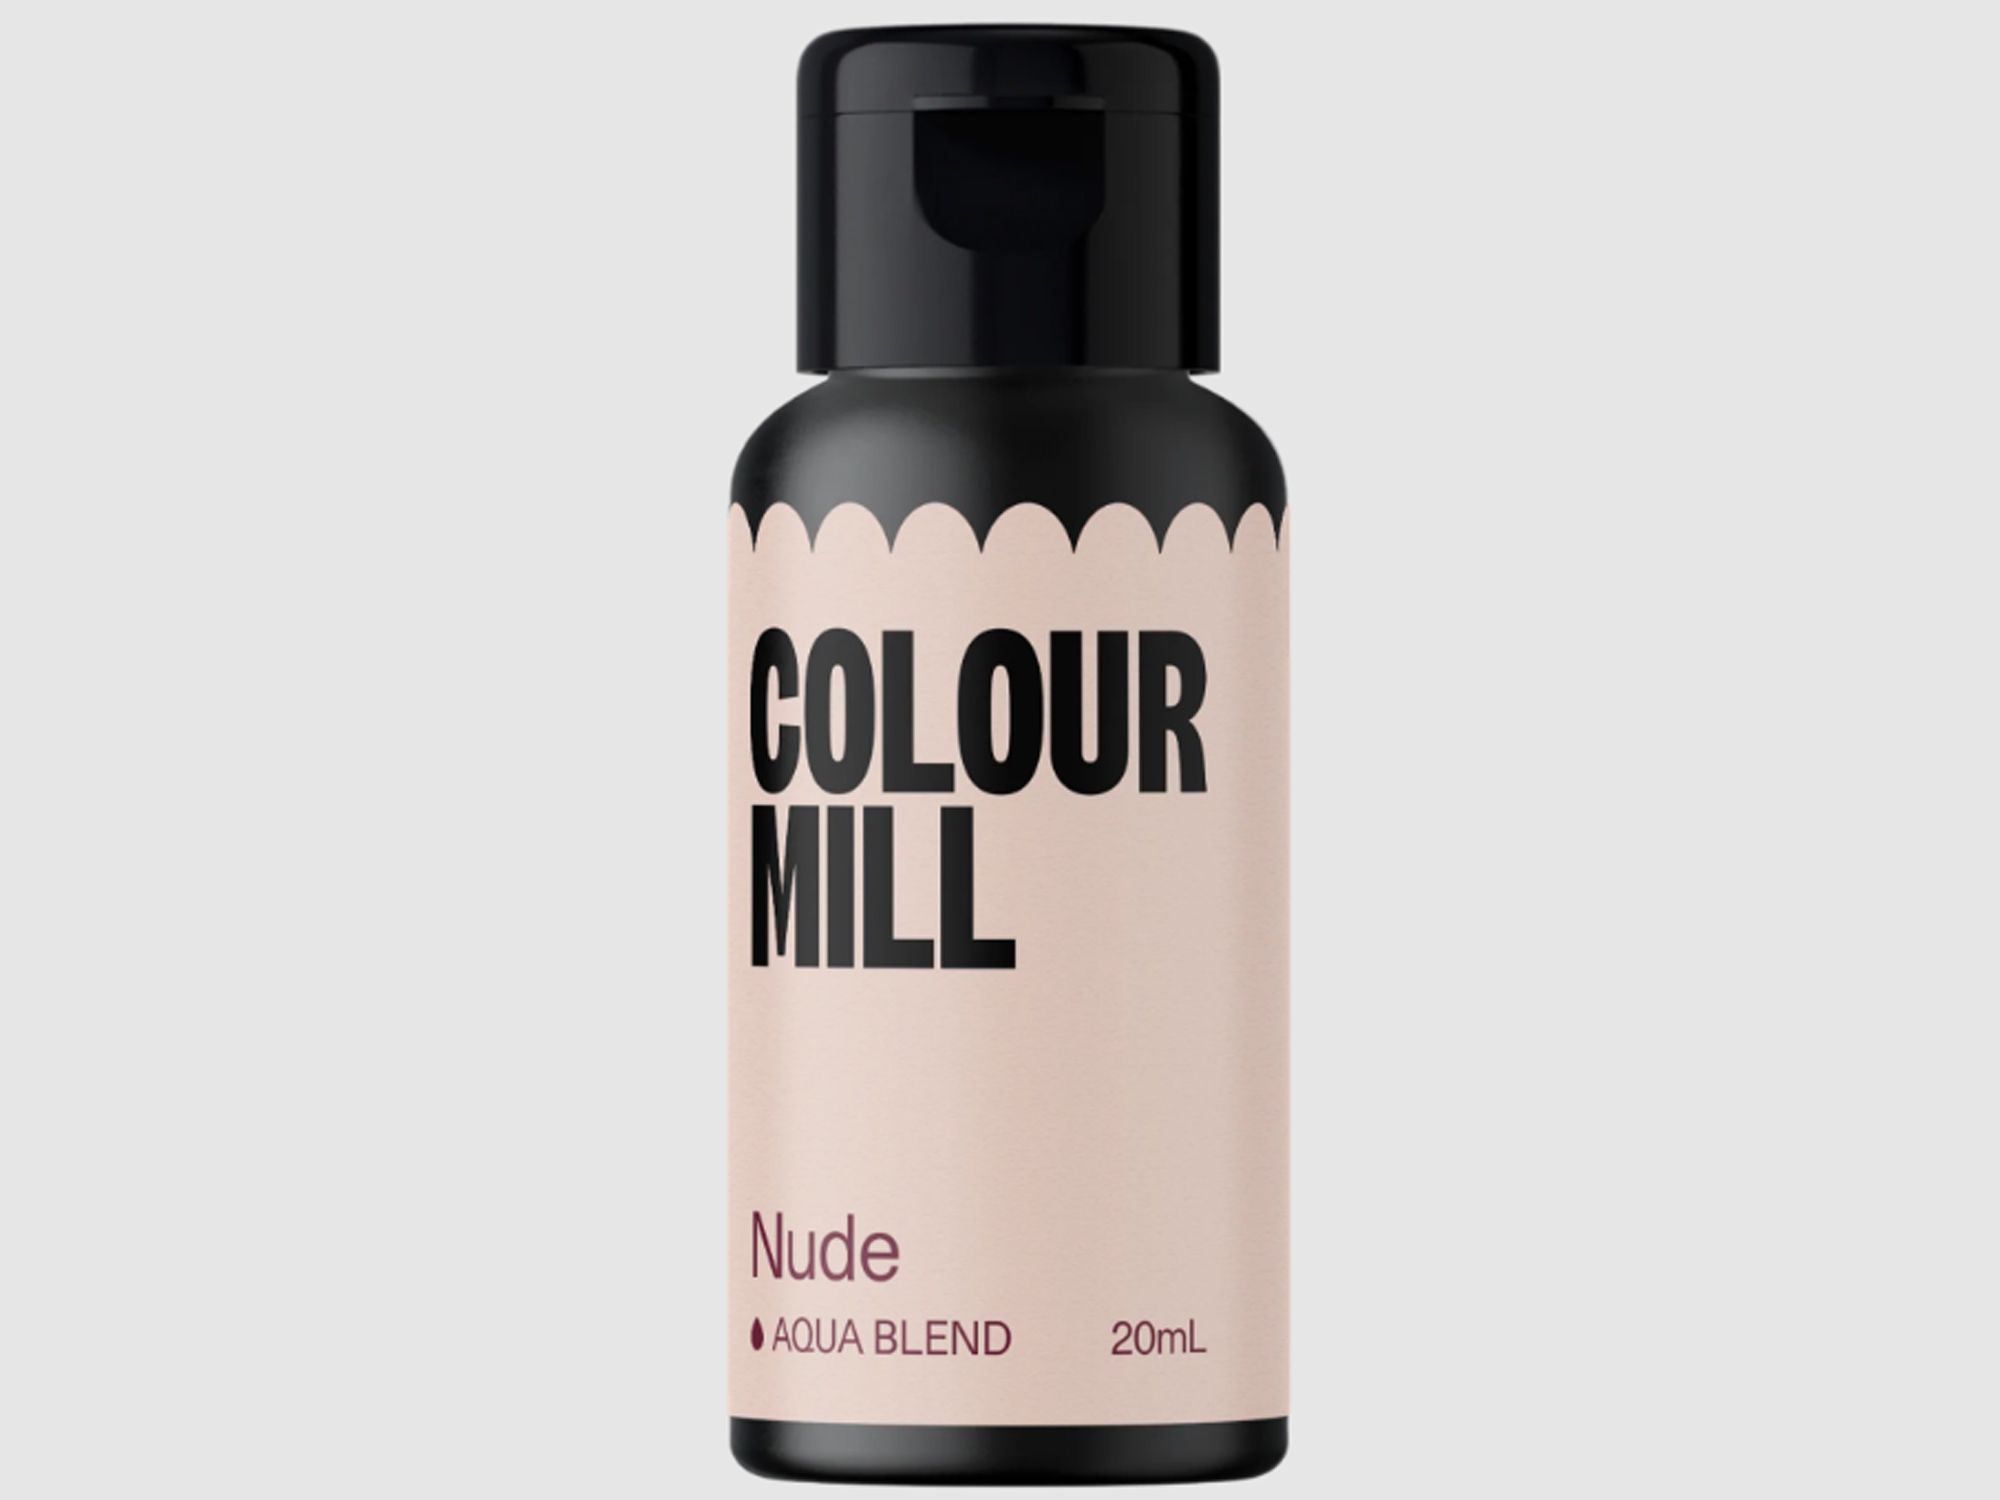 Colour Mill Nude (Aqua Blend) 20ml